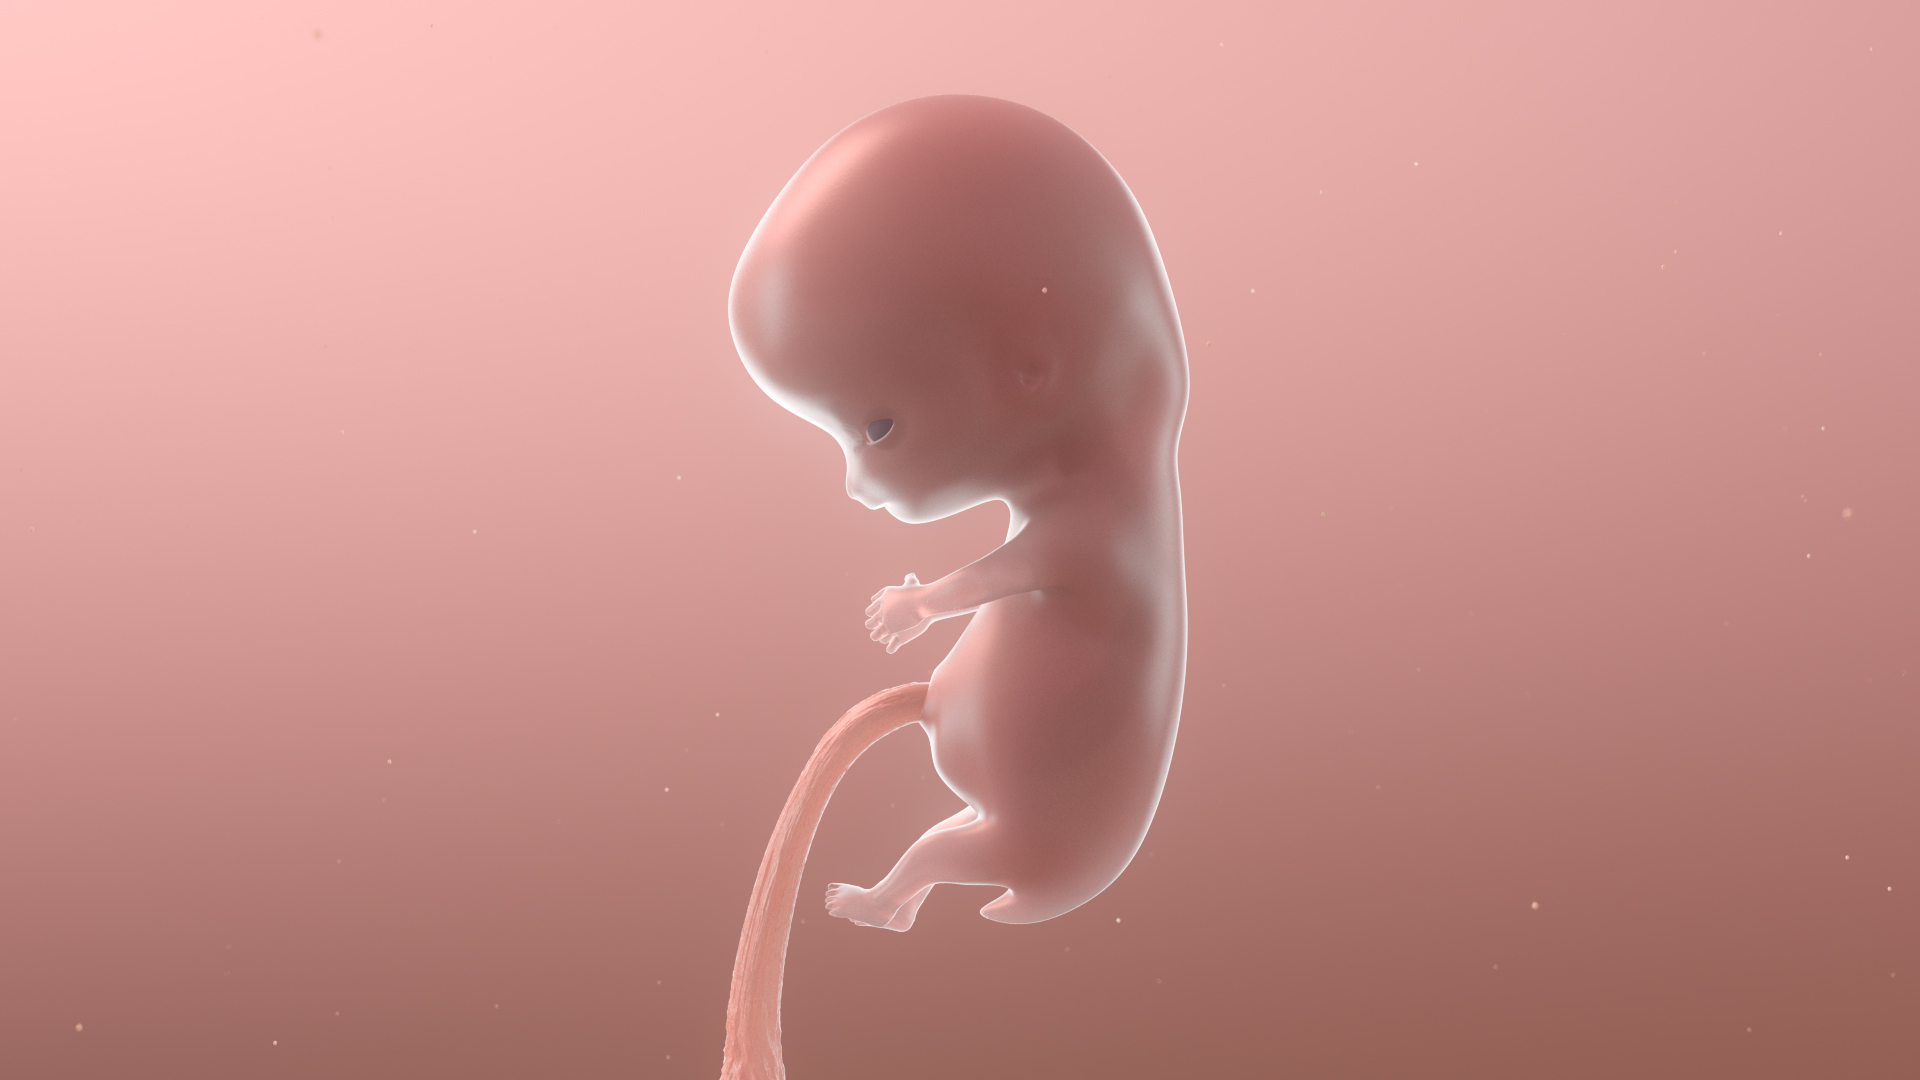 3D complete human egg fetus model https://p.turbosquid.com/ts-thumb/bx/NUeYJE/vSYfVZZu/stage3/jpg/1592029301/1920x1080/turn_fit_q99/516b44f2352cffa28b6f161a8f3dc85d93dd6fe9/stage3-1.jpg